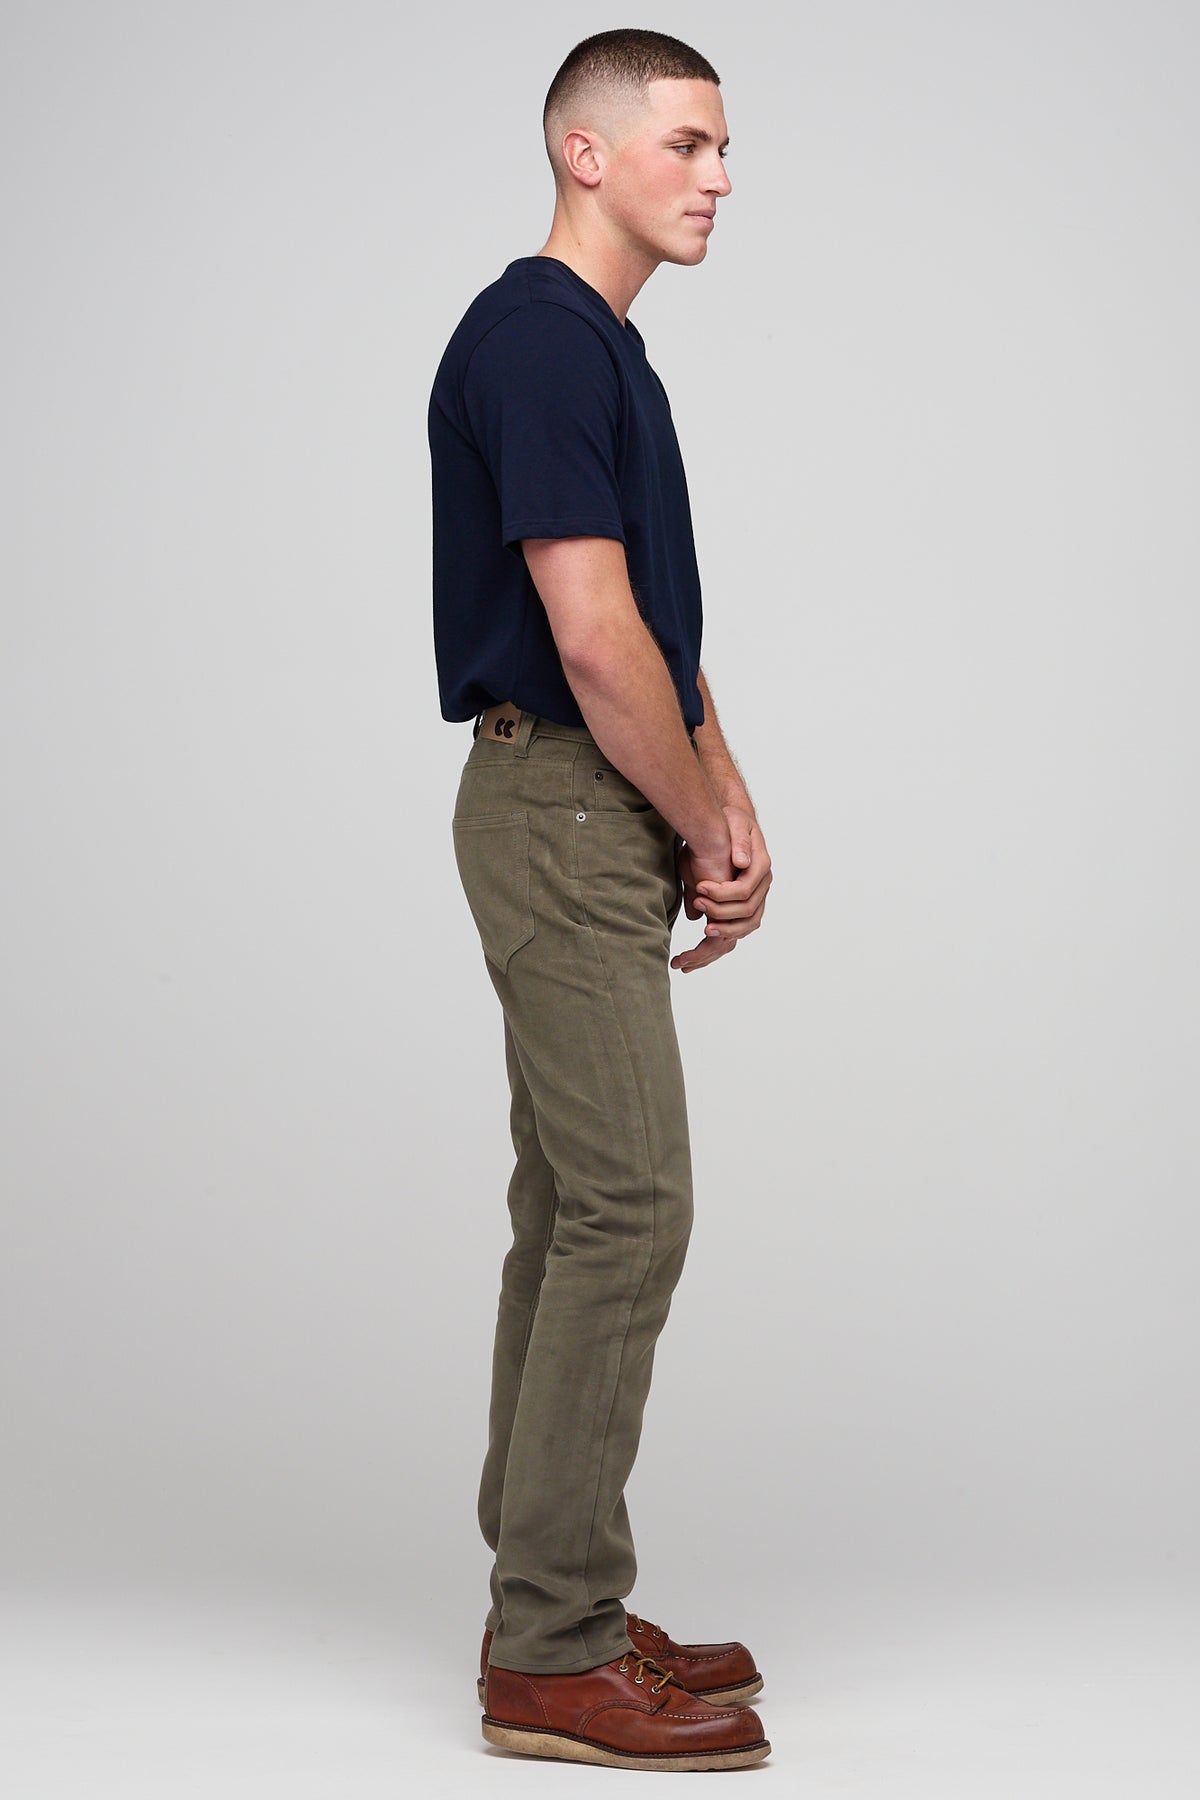 
            Brunette male in Olive Five Pocket Moleskin Jean styled with navy men&#39;s short sleeve t-shirt